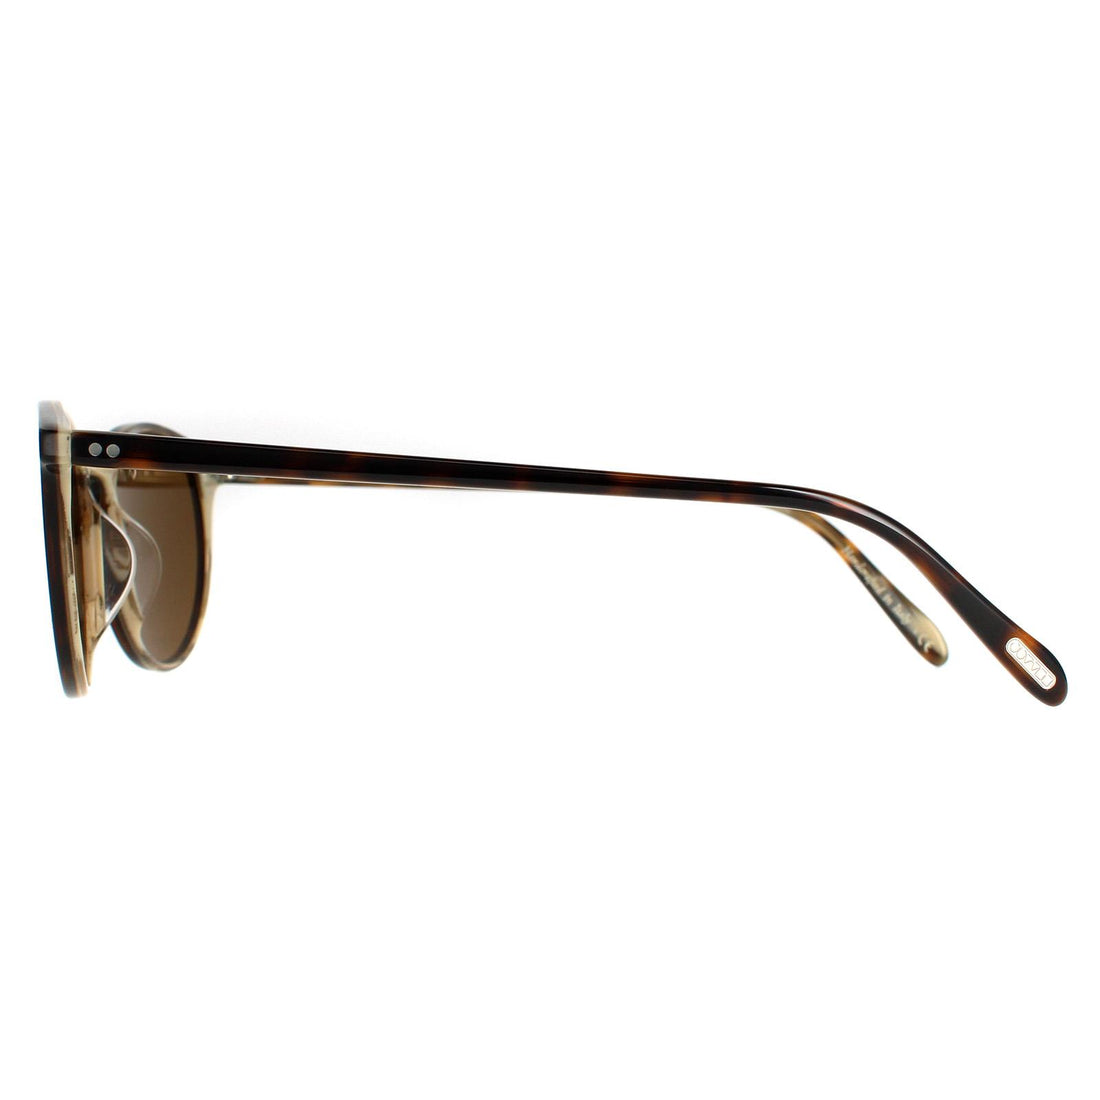 Oliver Peoples Sunglasses Riley OV5004SU 166657 Horn True Brown Polarized